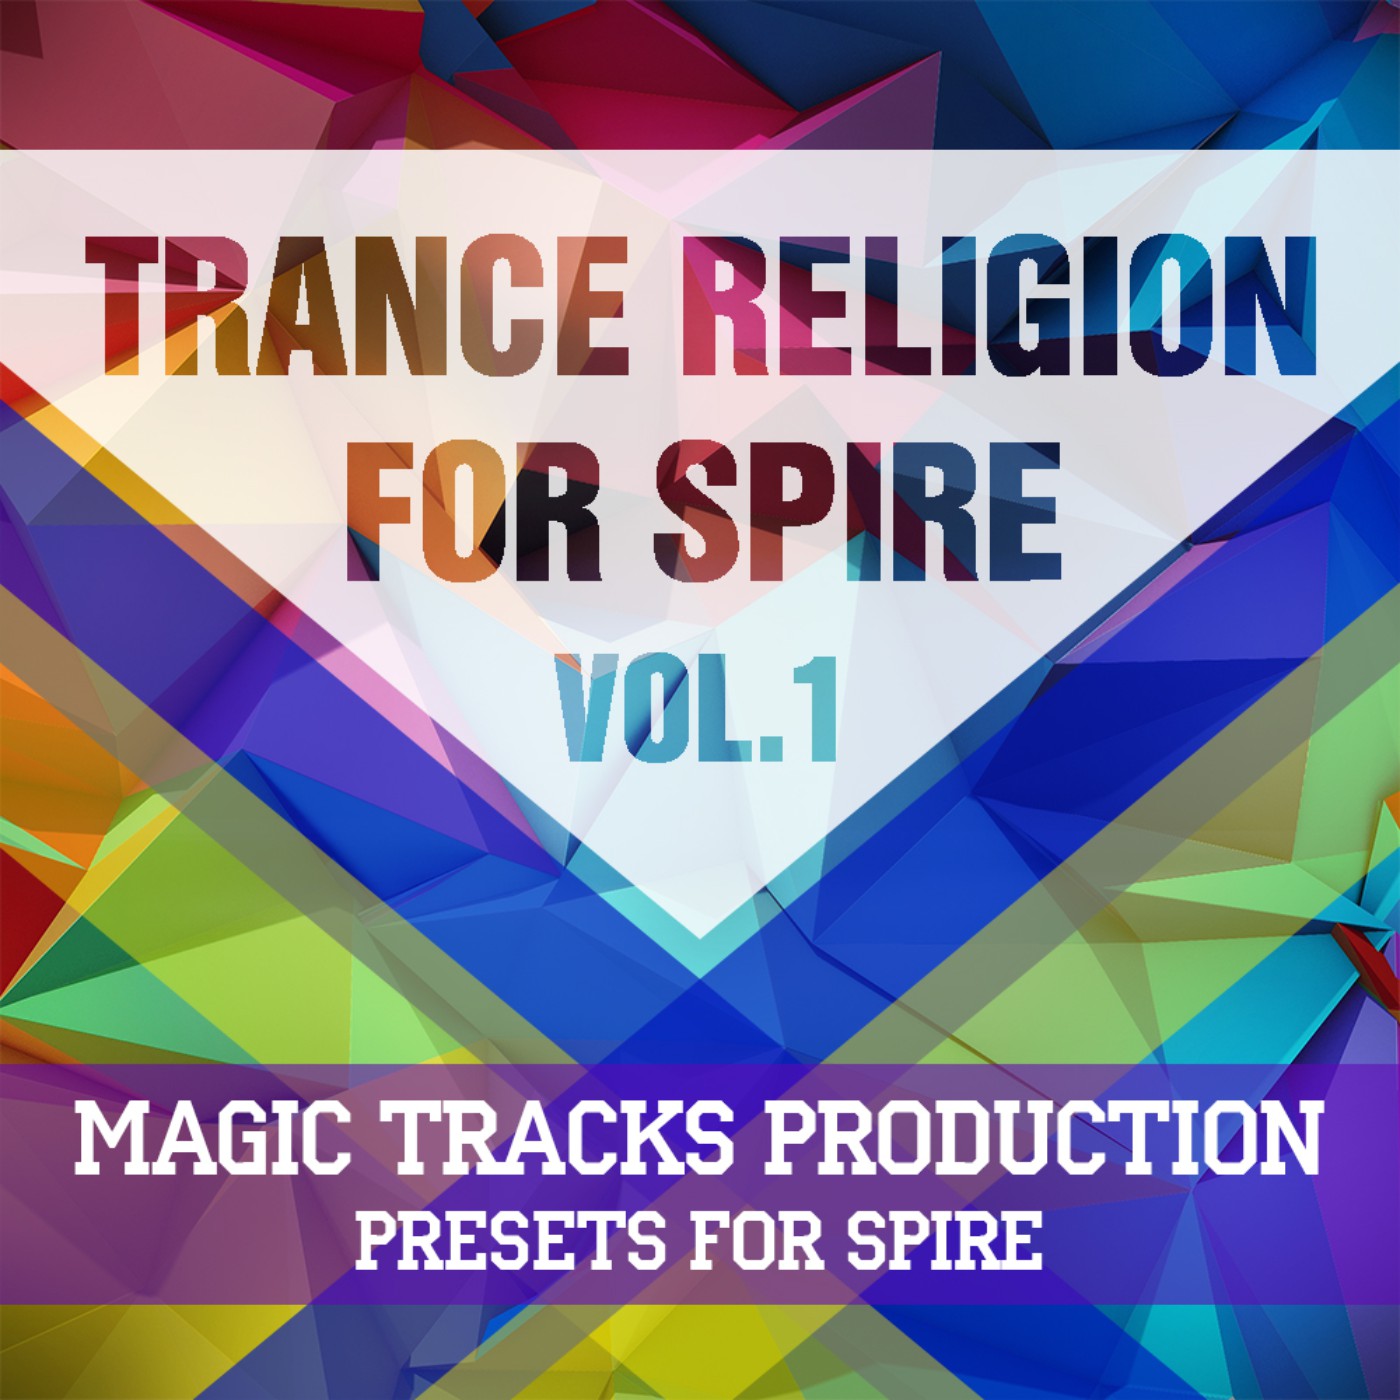 Trance Religion for Spire Vol.1